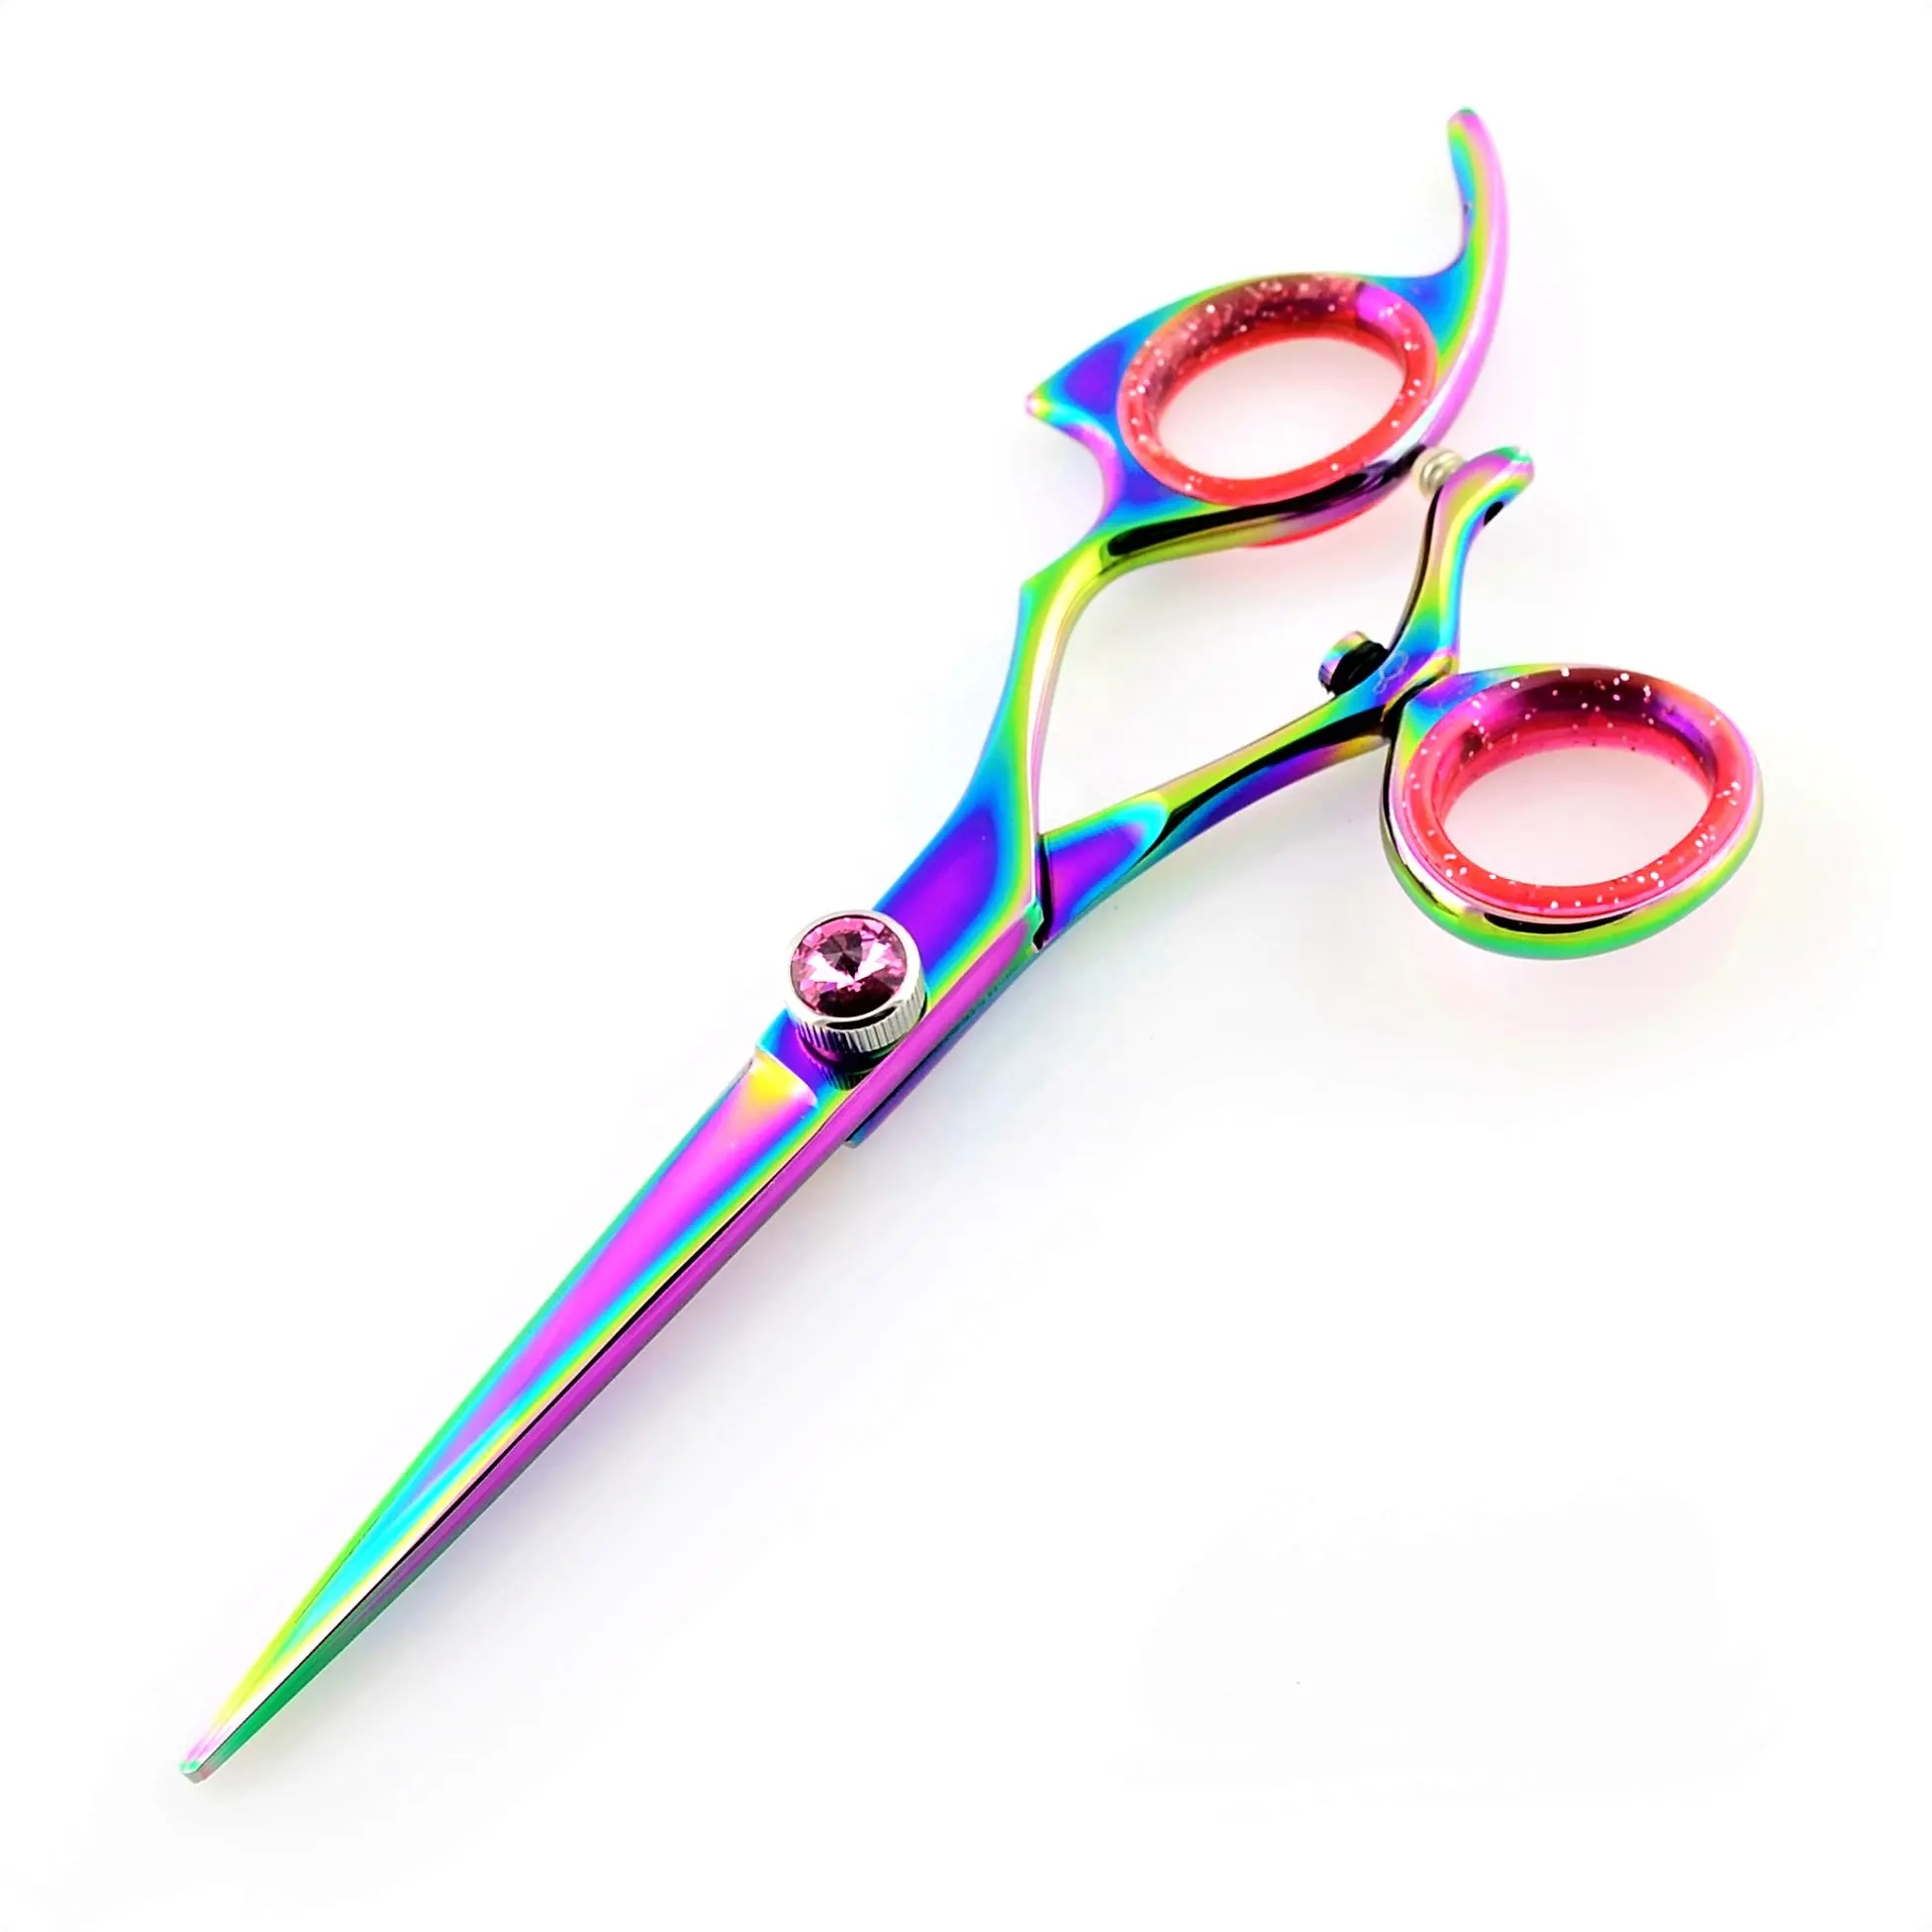 Swivel thumb hair scissors Hair Cutting Shears with customization Razor Sharp blades Multi Plasma Coated Salon Barber Shears